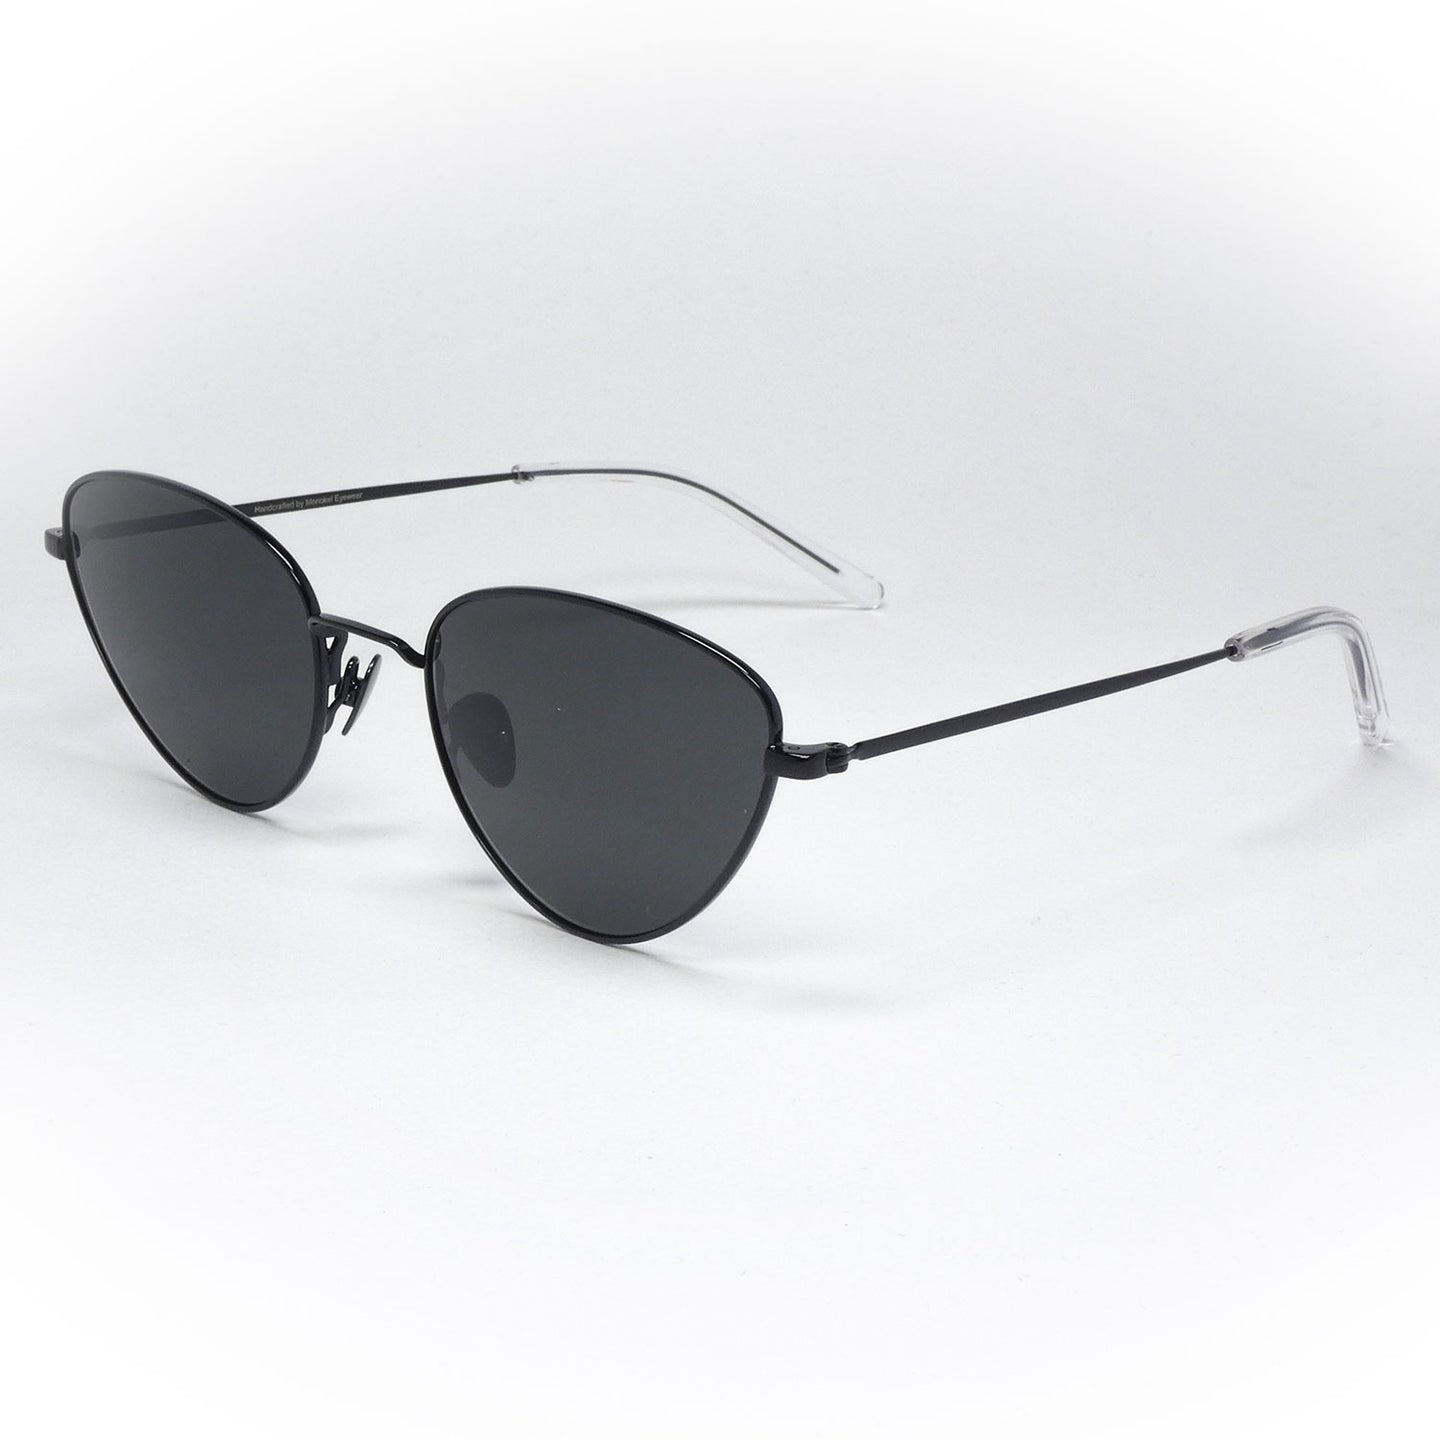 sunglasses monokel model luna color black angled view